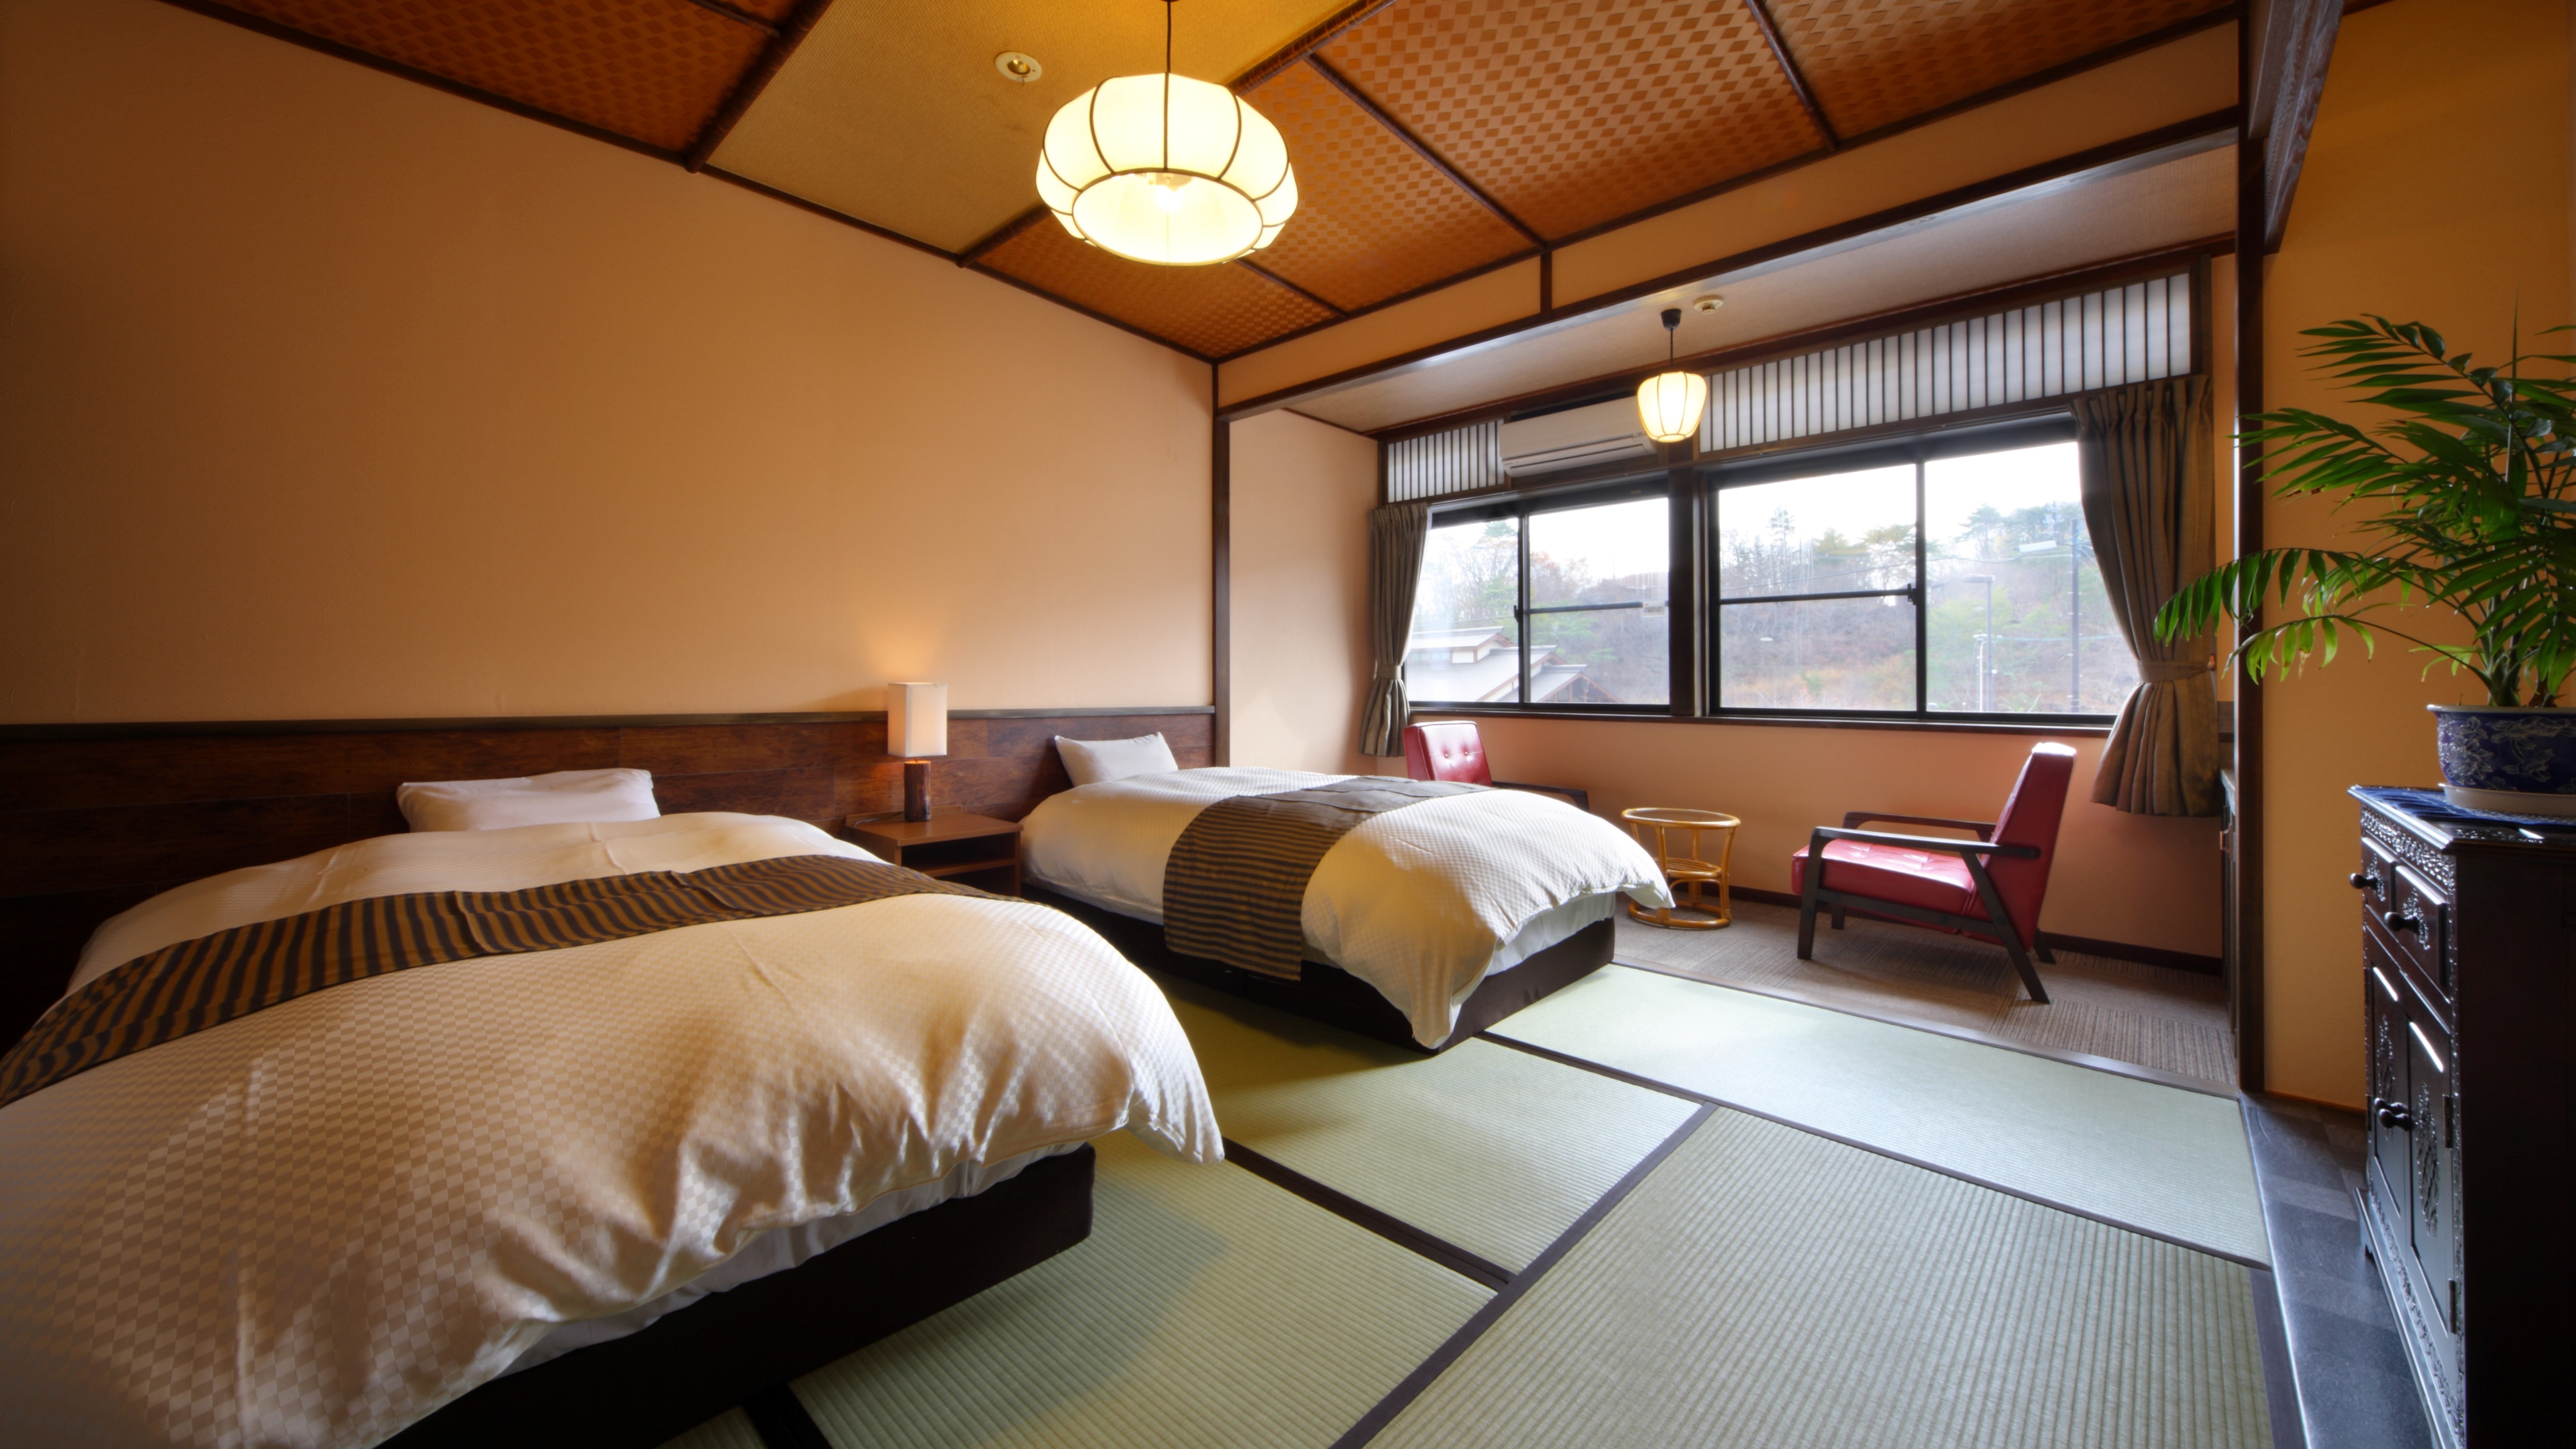 Kamar tidur Jepang dan Barat